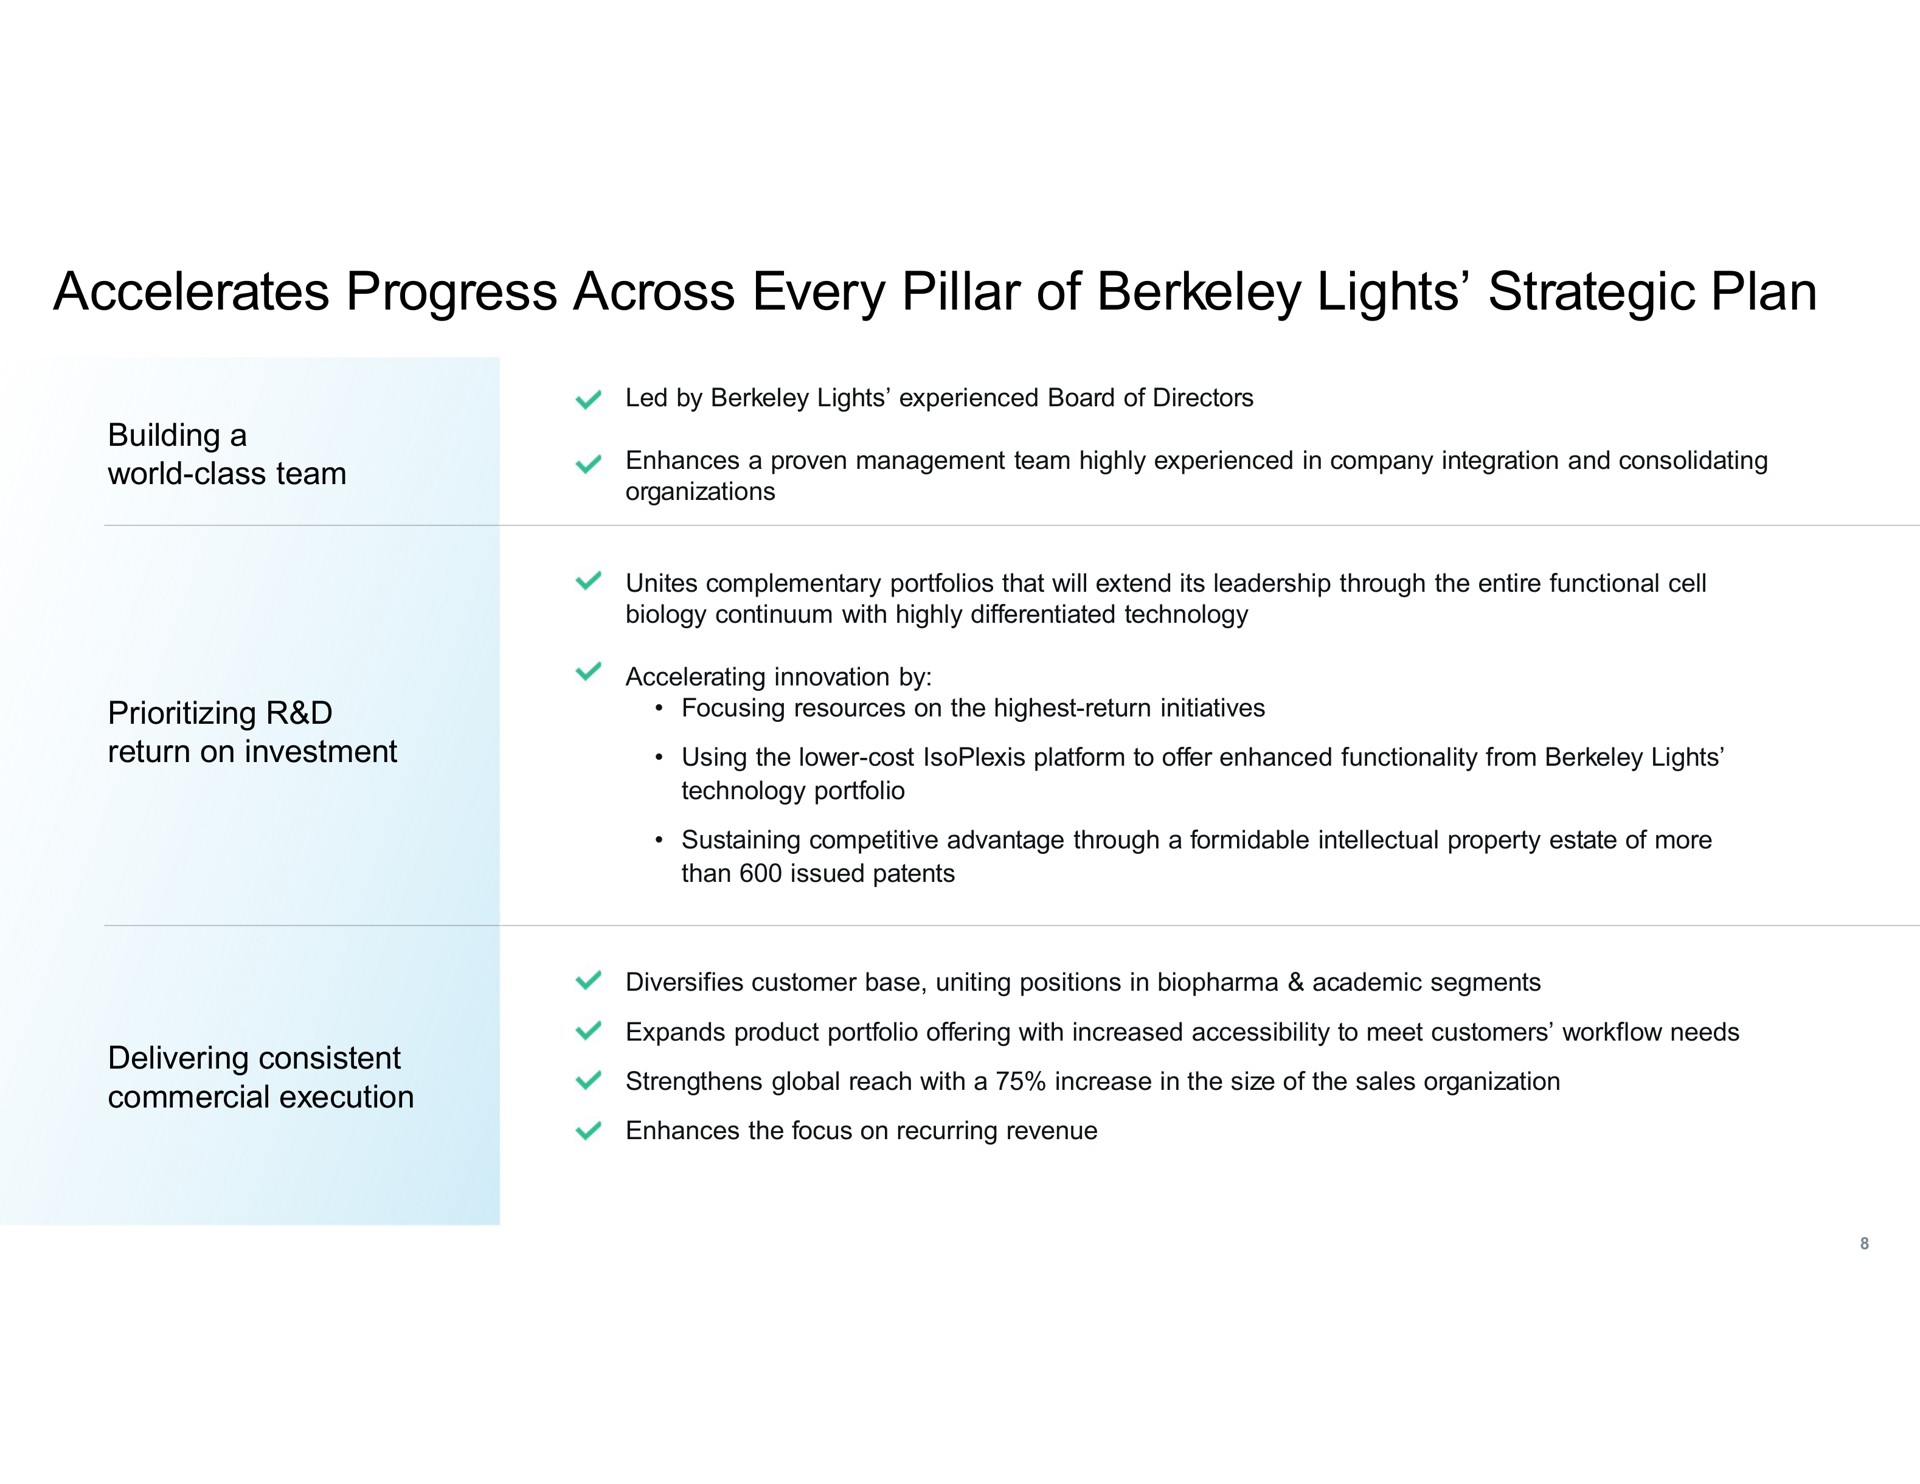 accelerates progress across every pillar of lights strategic plan | Berkeley Lights